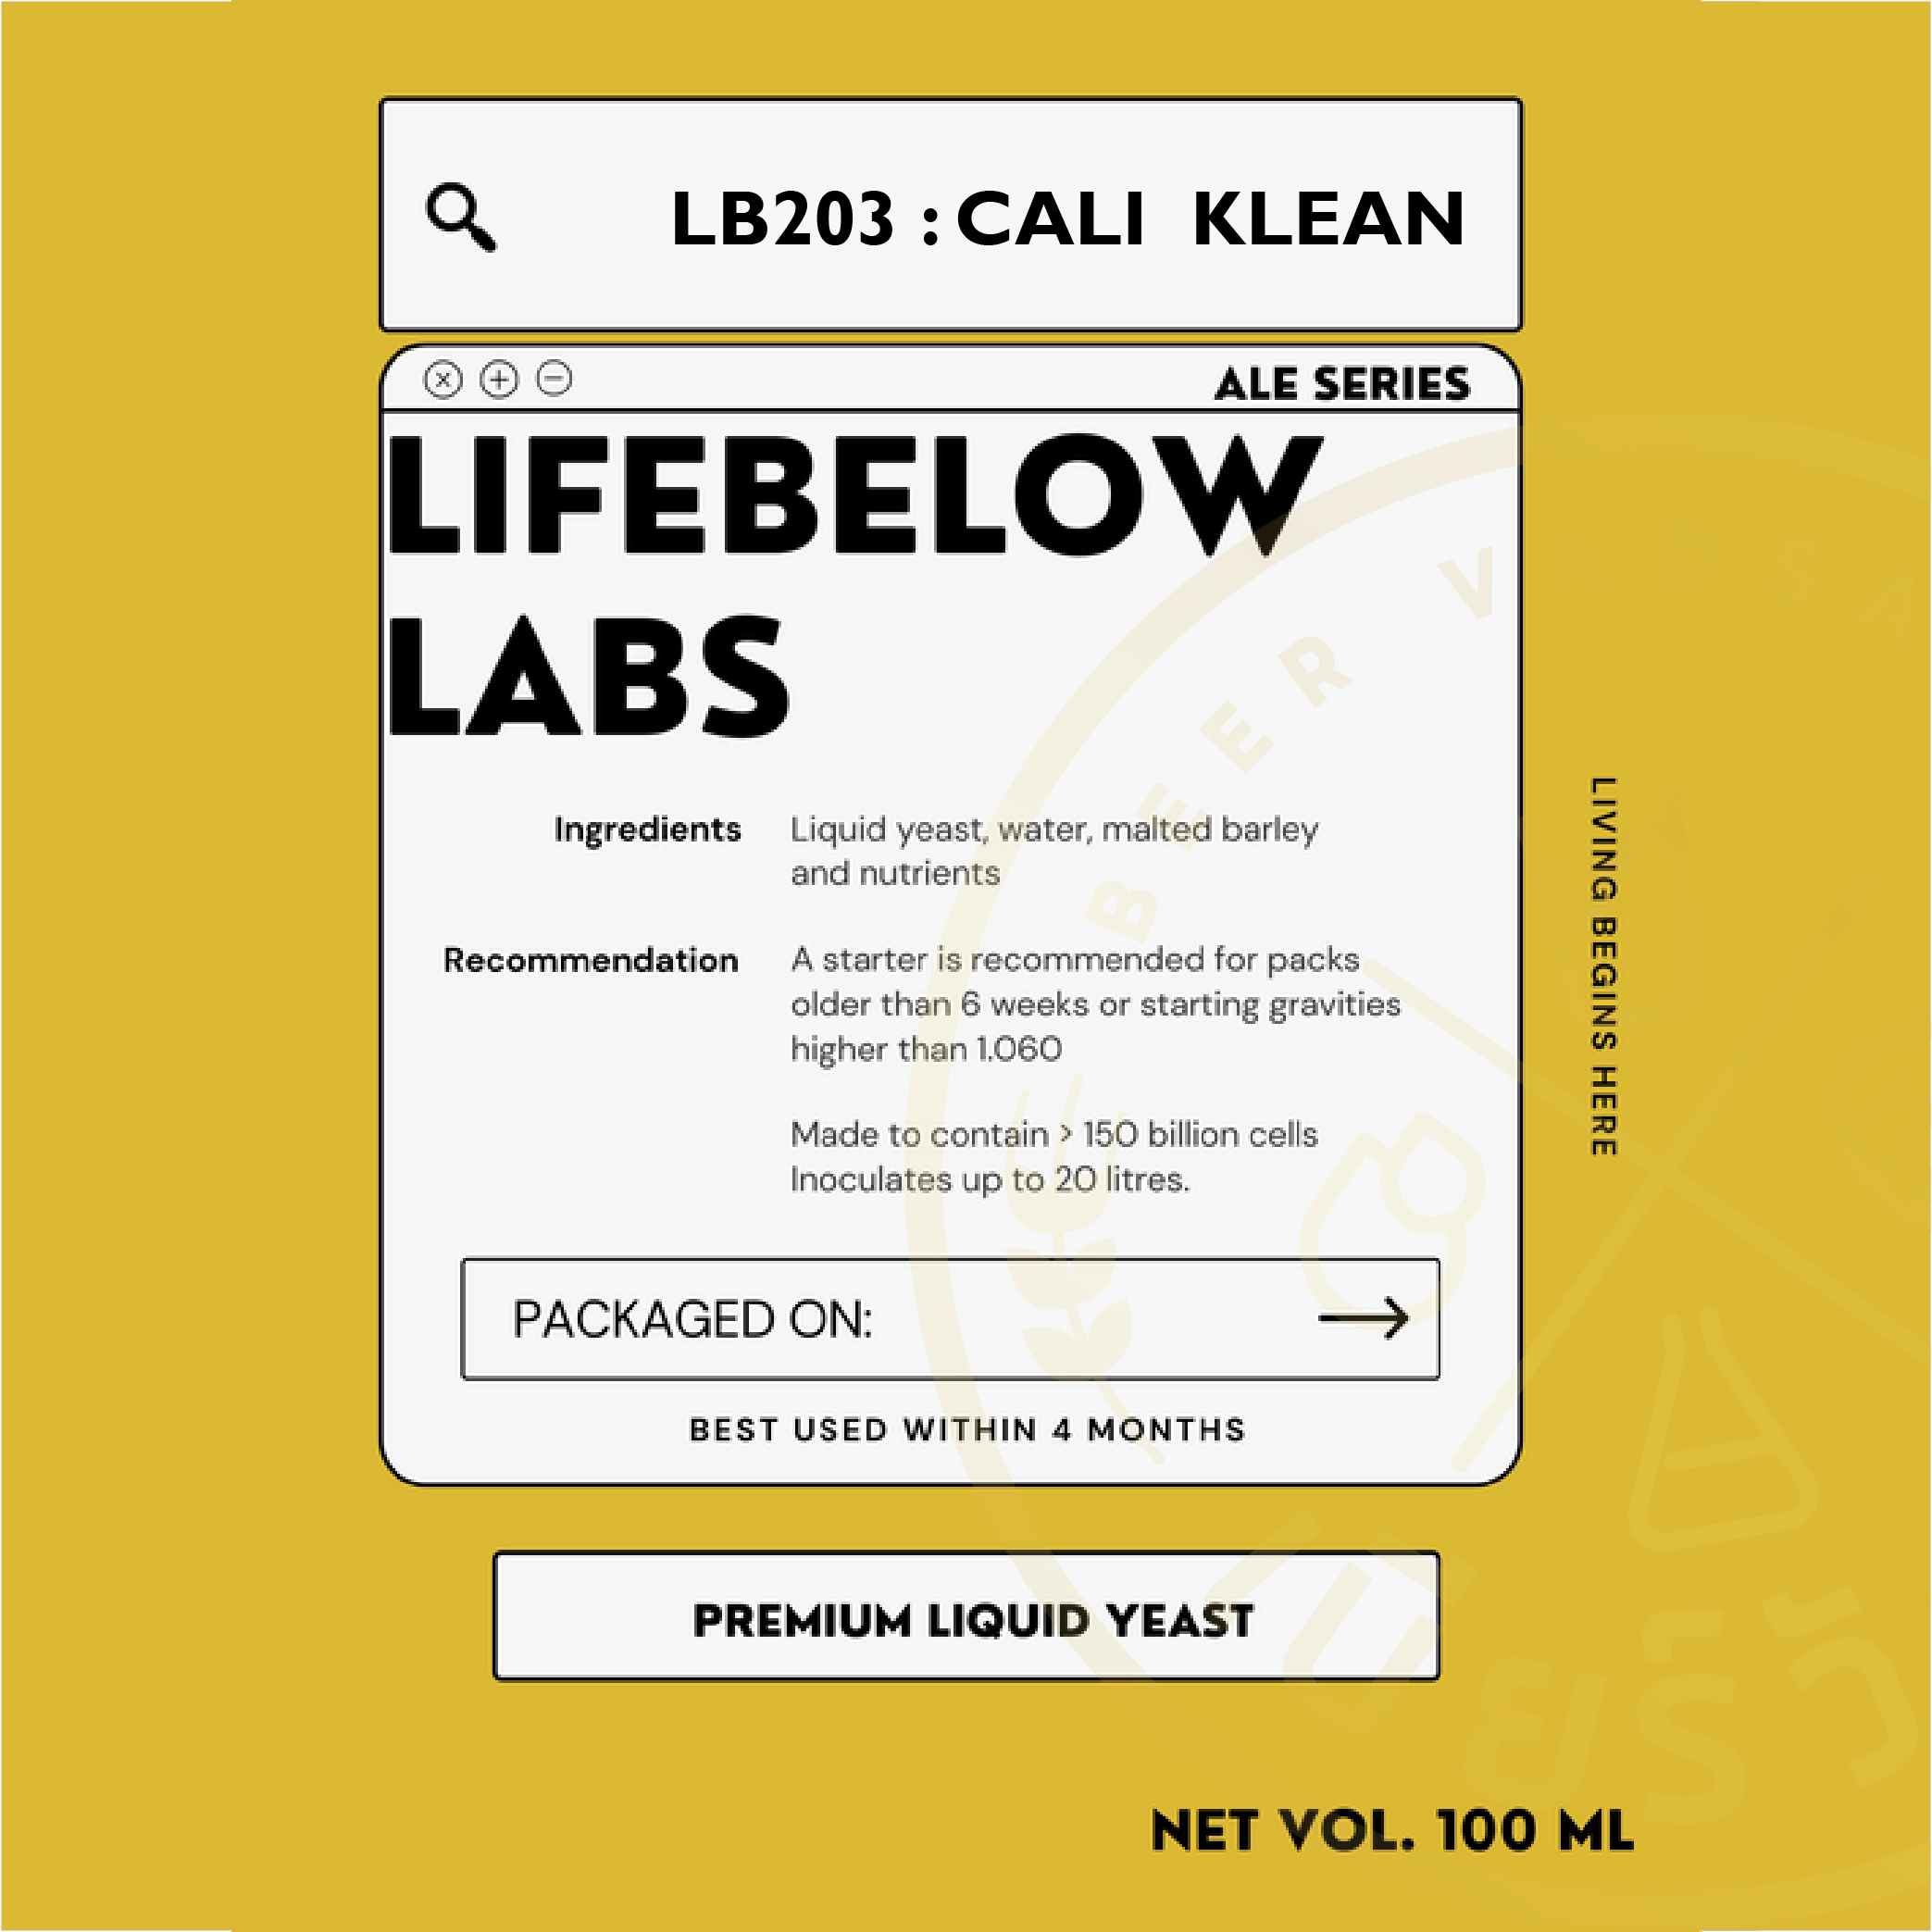 LB203 Cali Klean (Life Below)